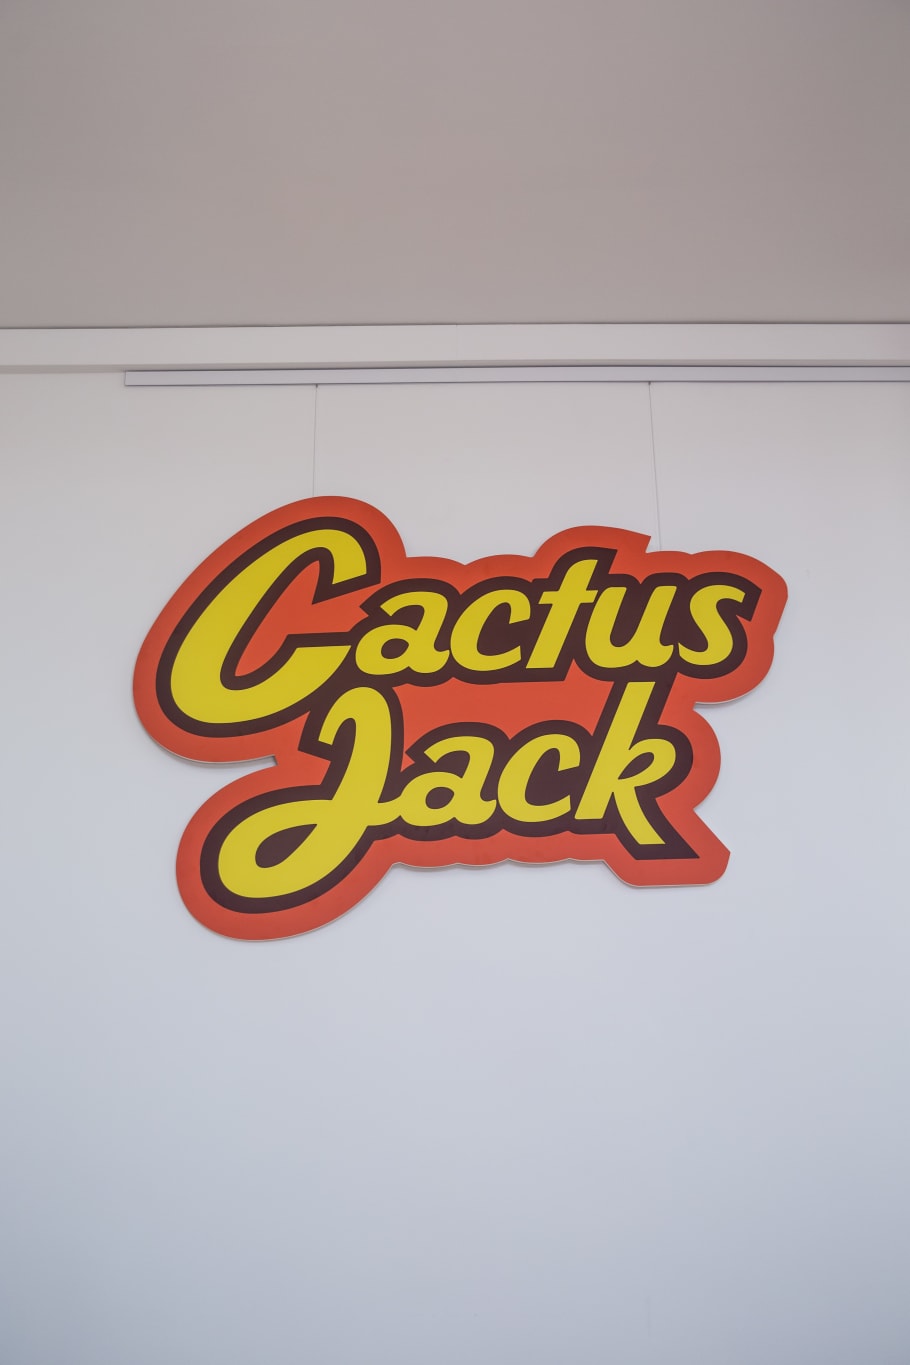 cactus jack reese's